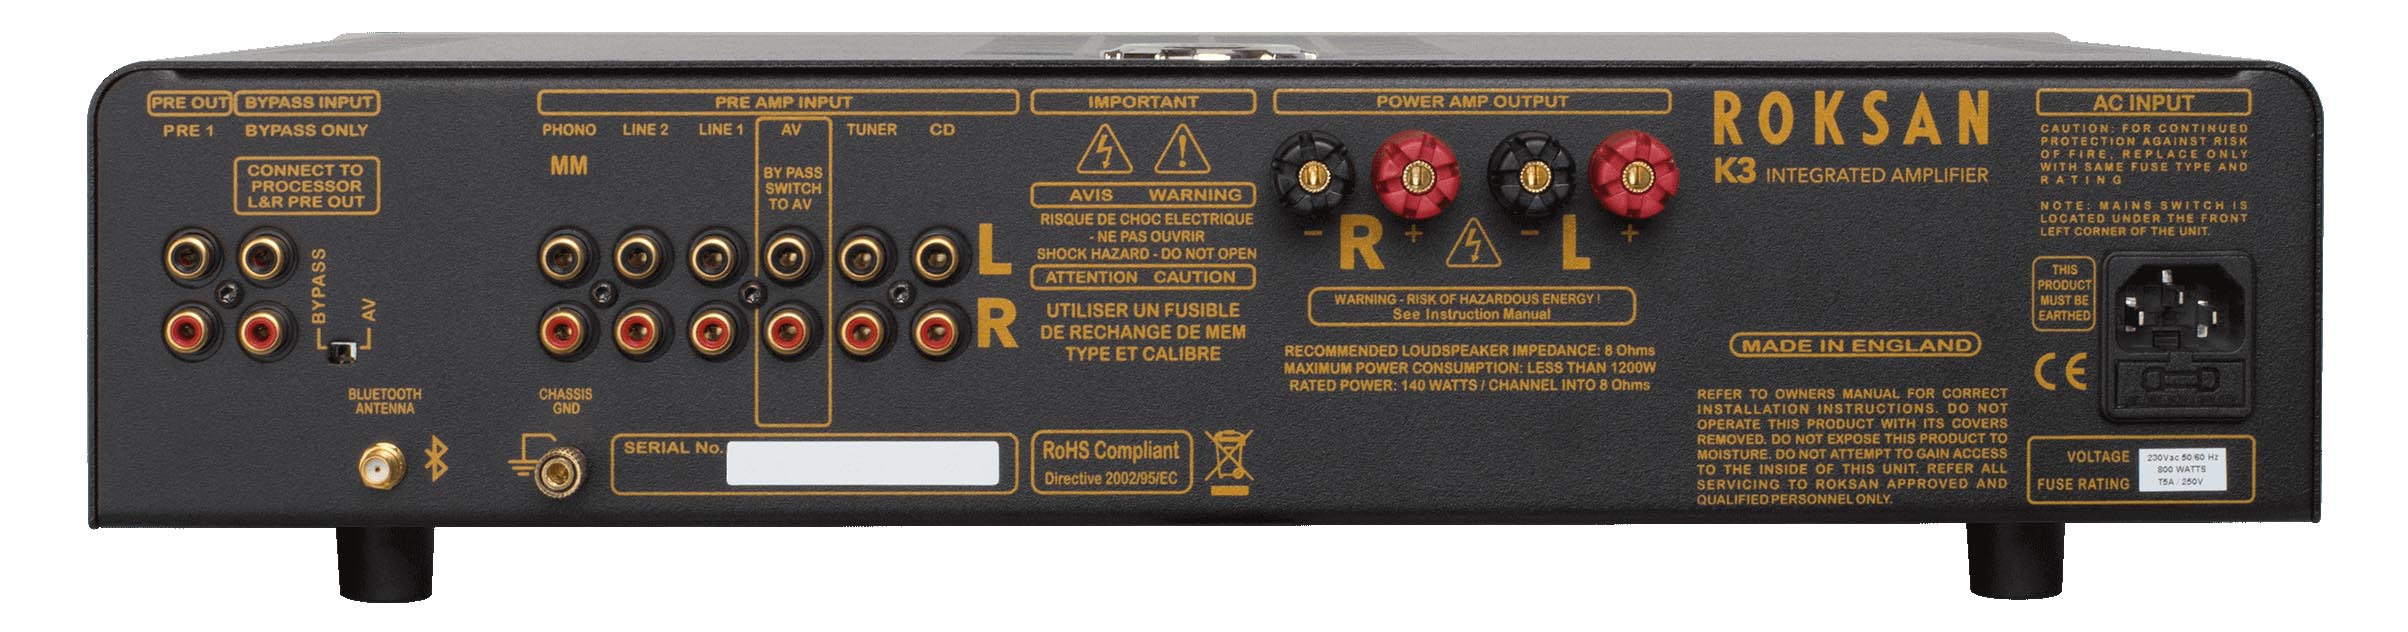 Roksan K3 Integrated Amplifier charcoal